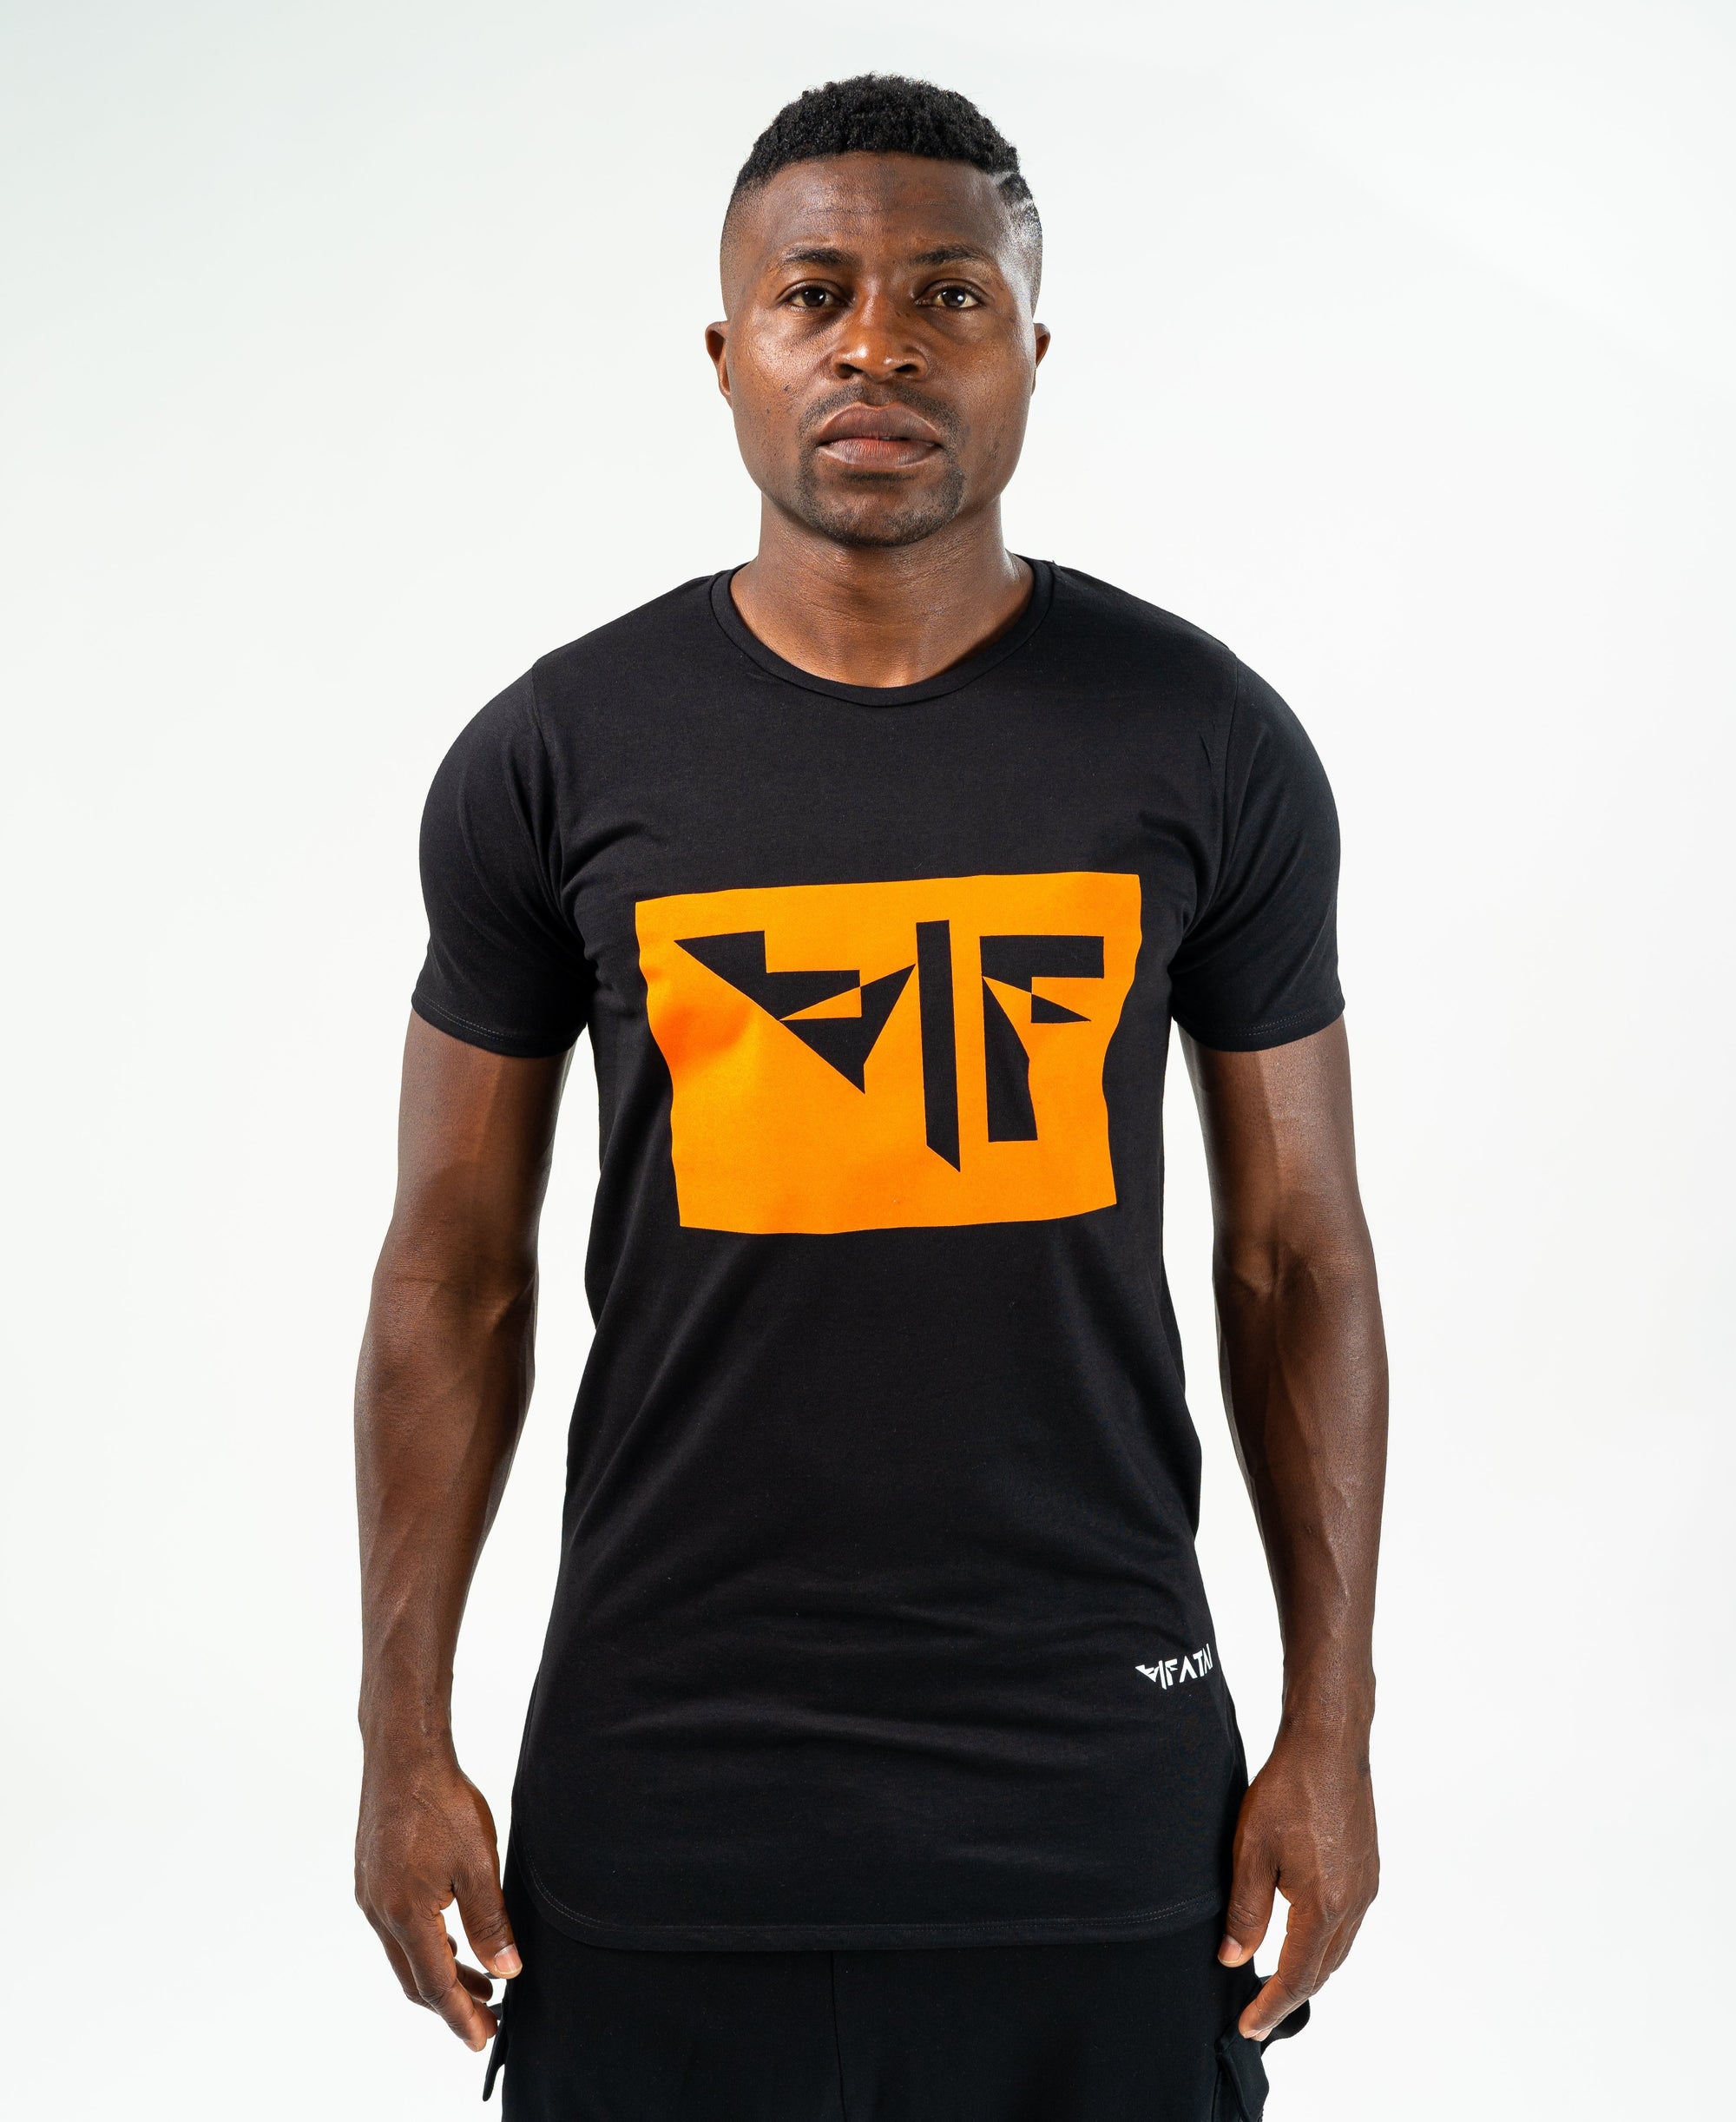 Black t-shirt with orange logo - Fatai Style